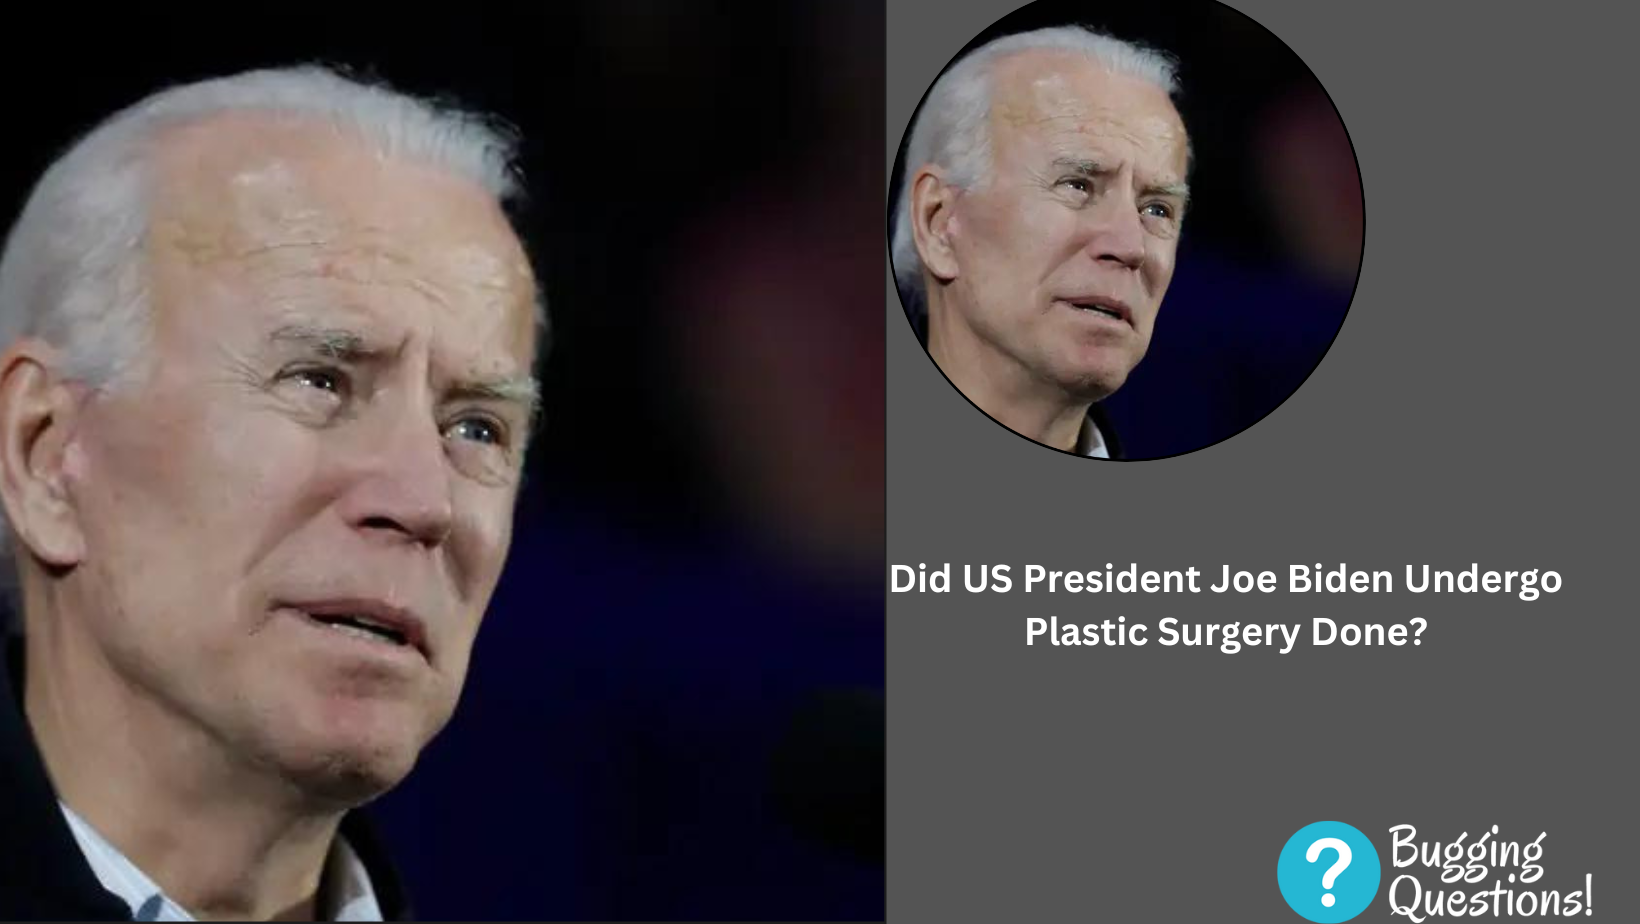 Did US President Joe Biden Undergo Plastic Surgery Done?